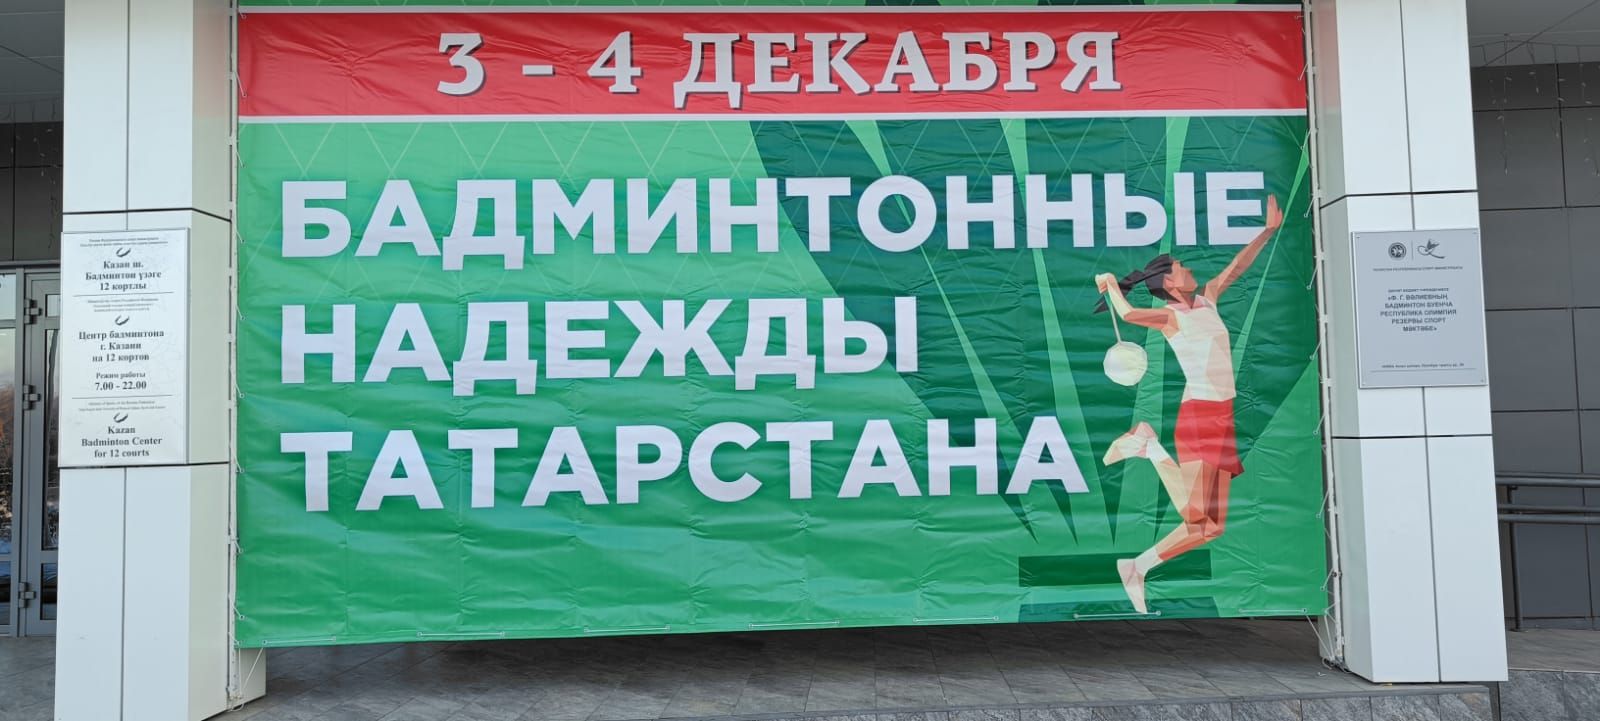 Актаныш бадминтончылары- Татарстанның бадминтон өметләре буларак хөрмәтләнде